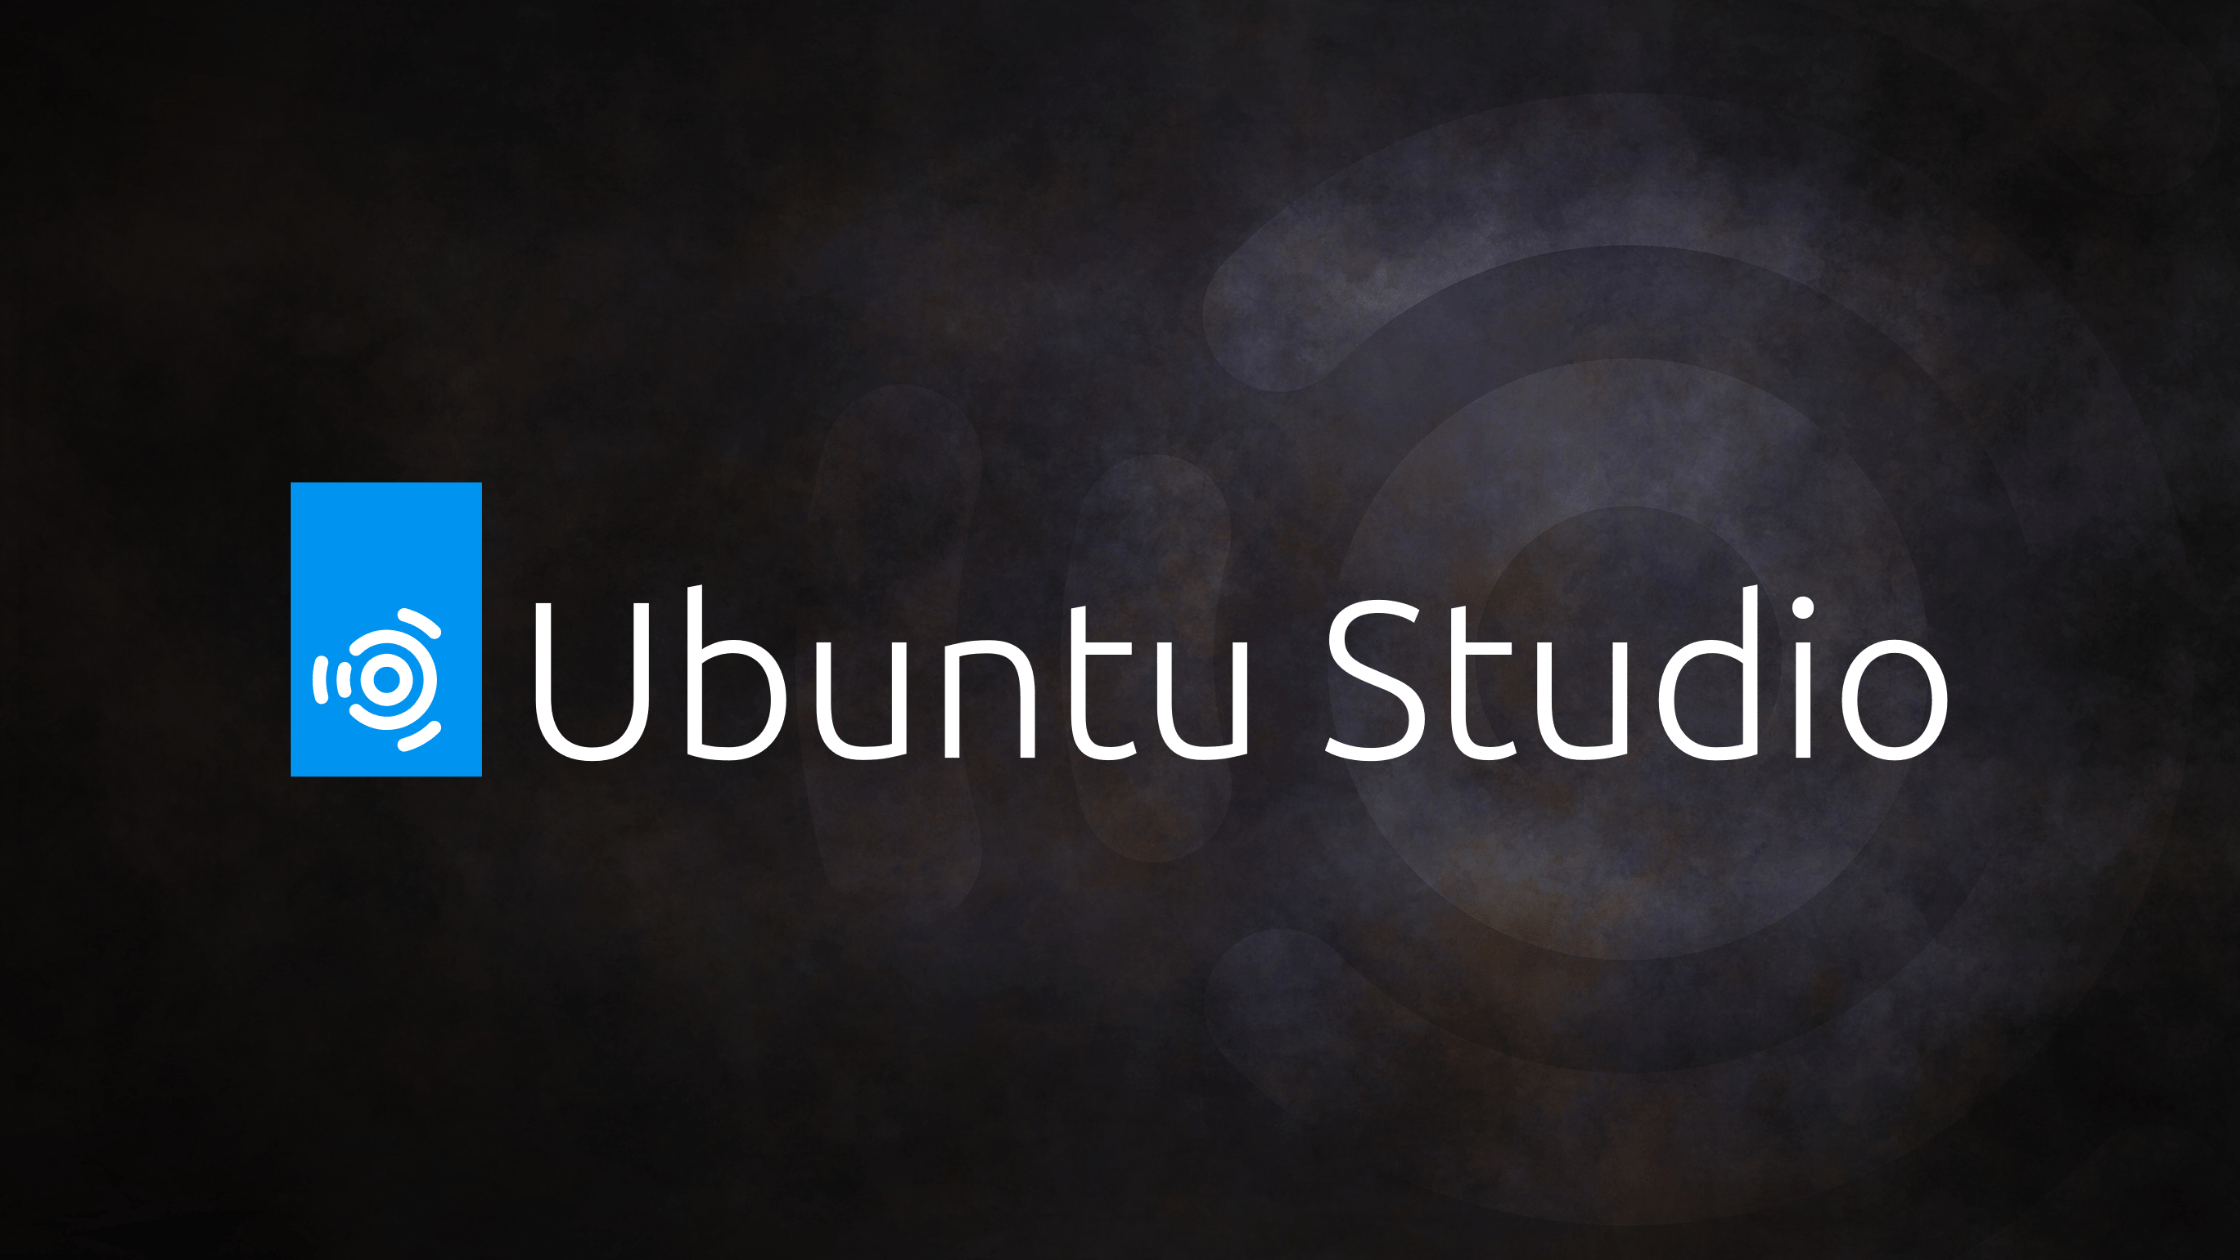 Switching from Kubuntu to Ubuntu Studio